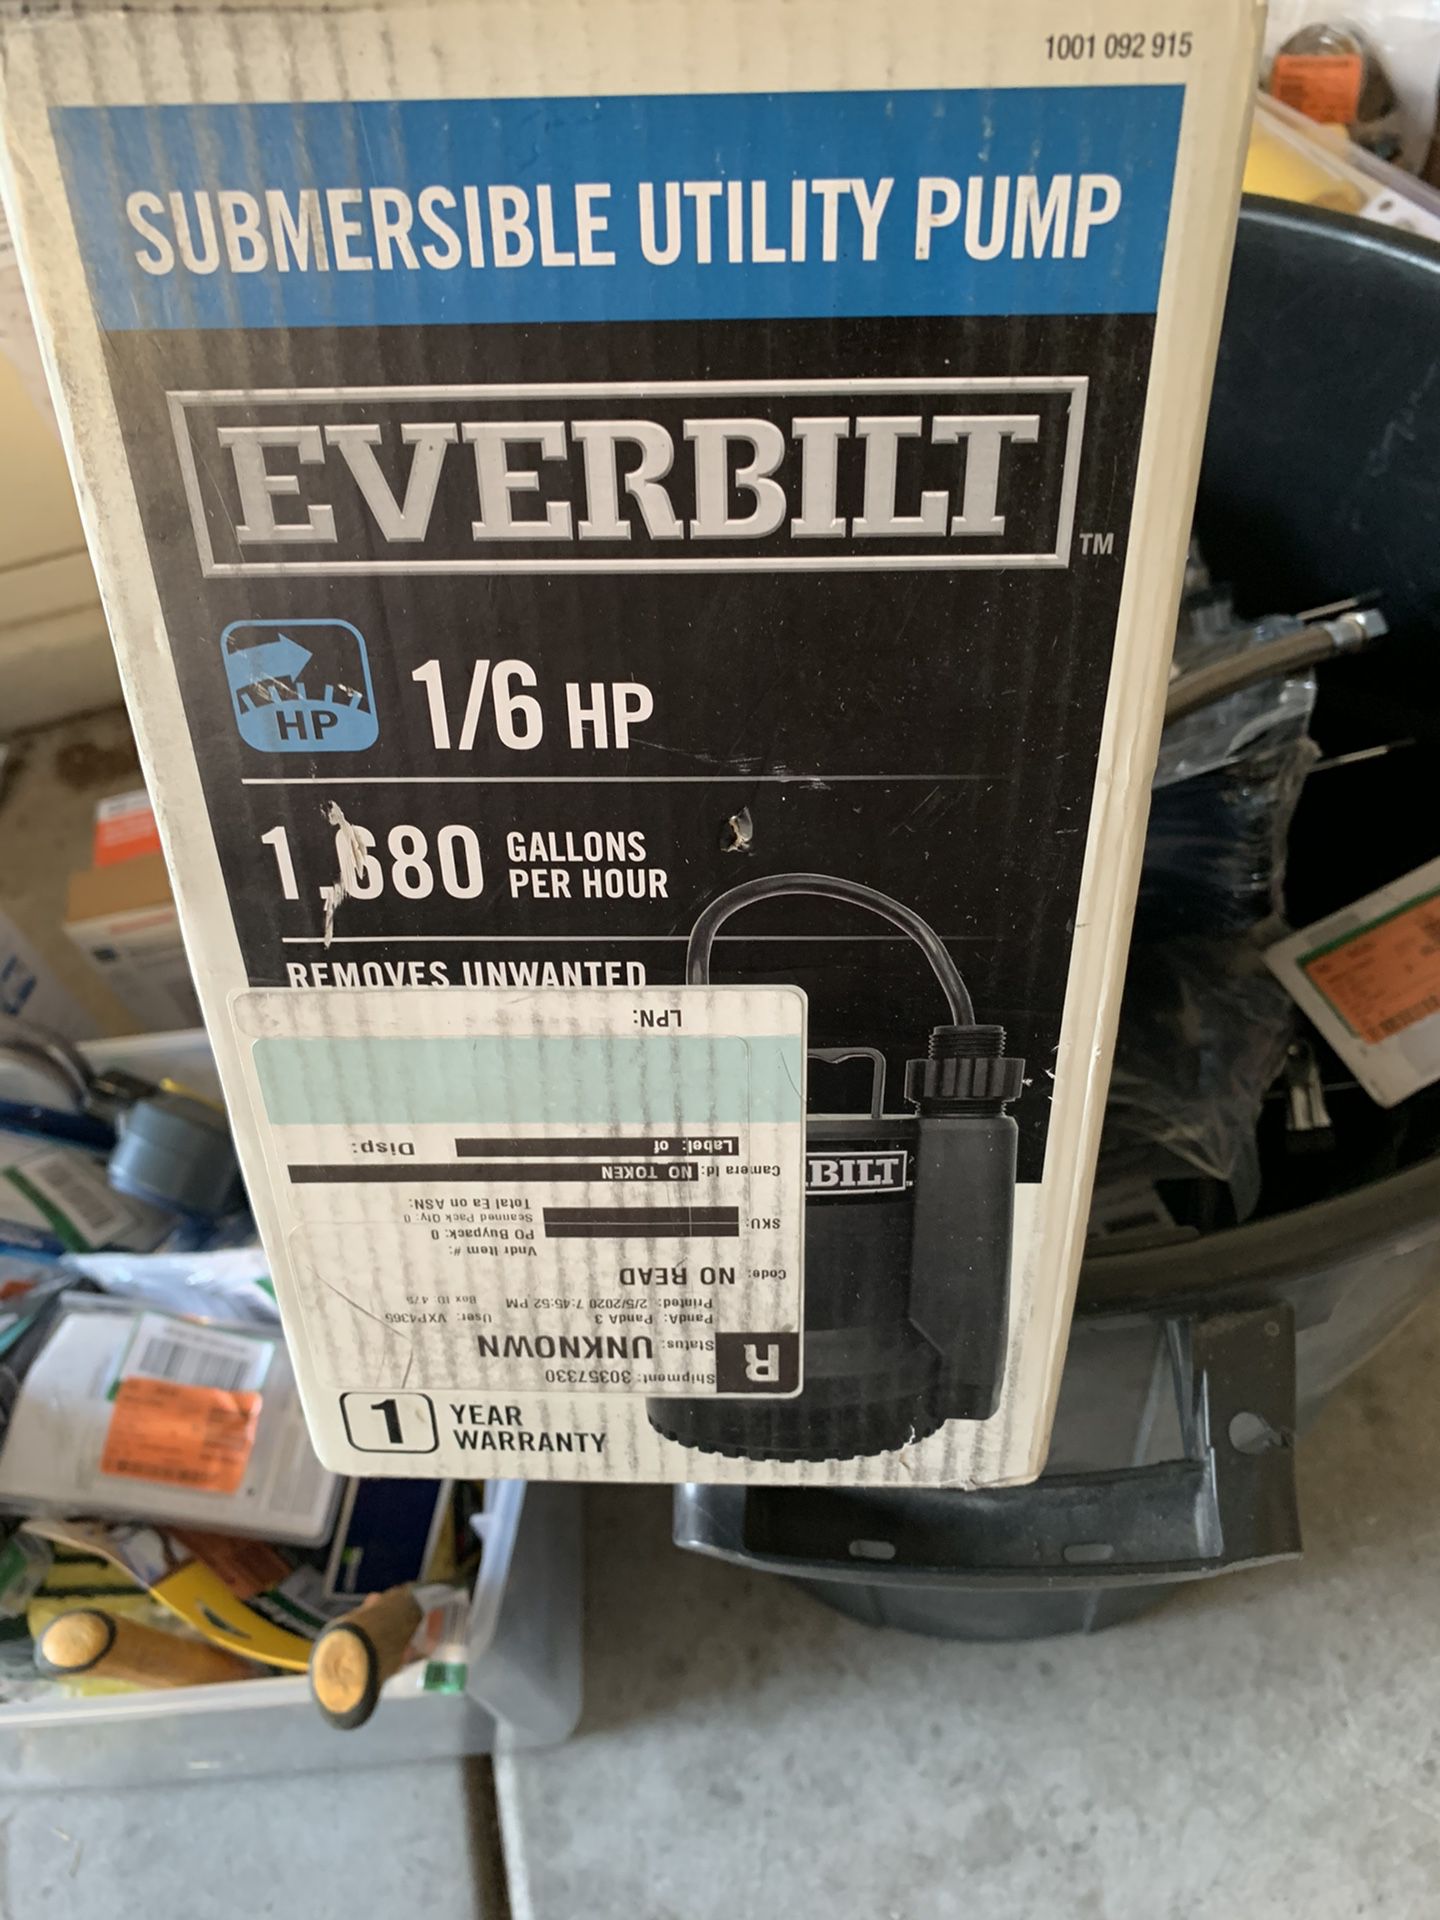 Everbilt Submersible Utility Pump